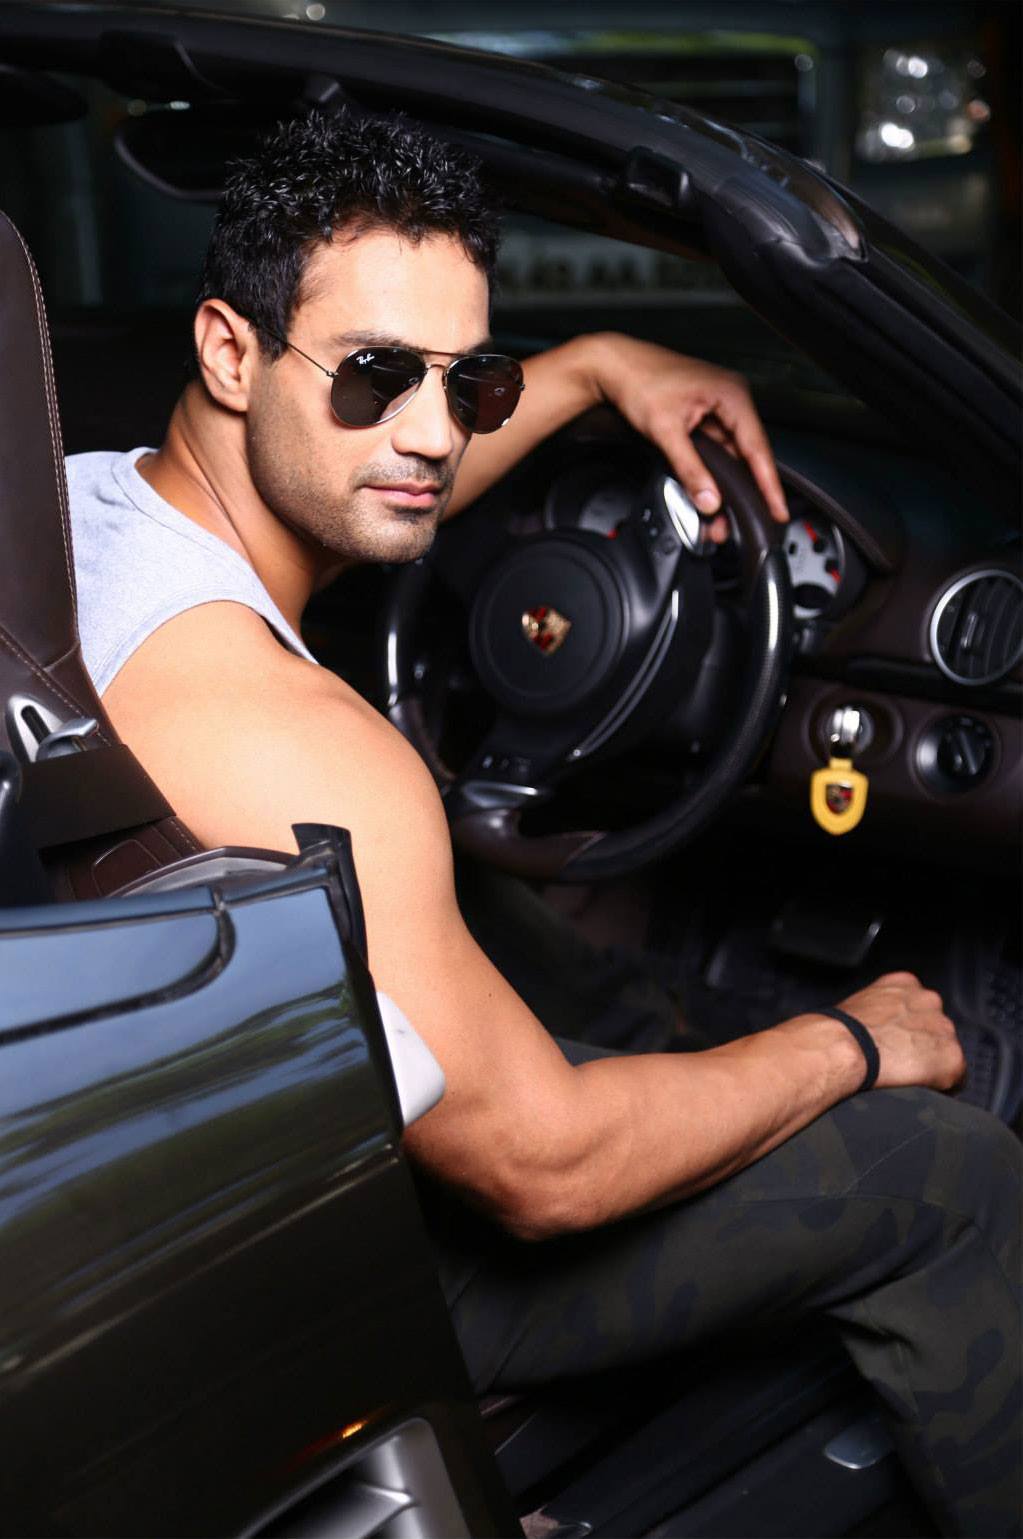 Karan Oberoi Indian FTV Hot male model.